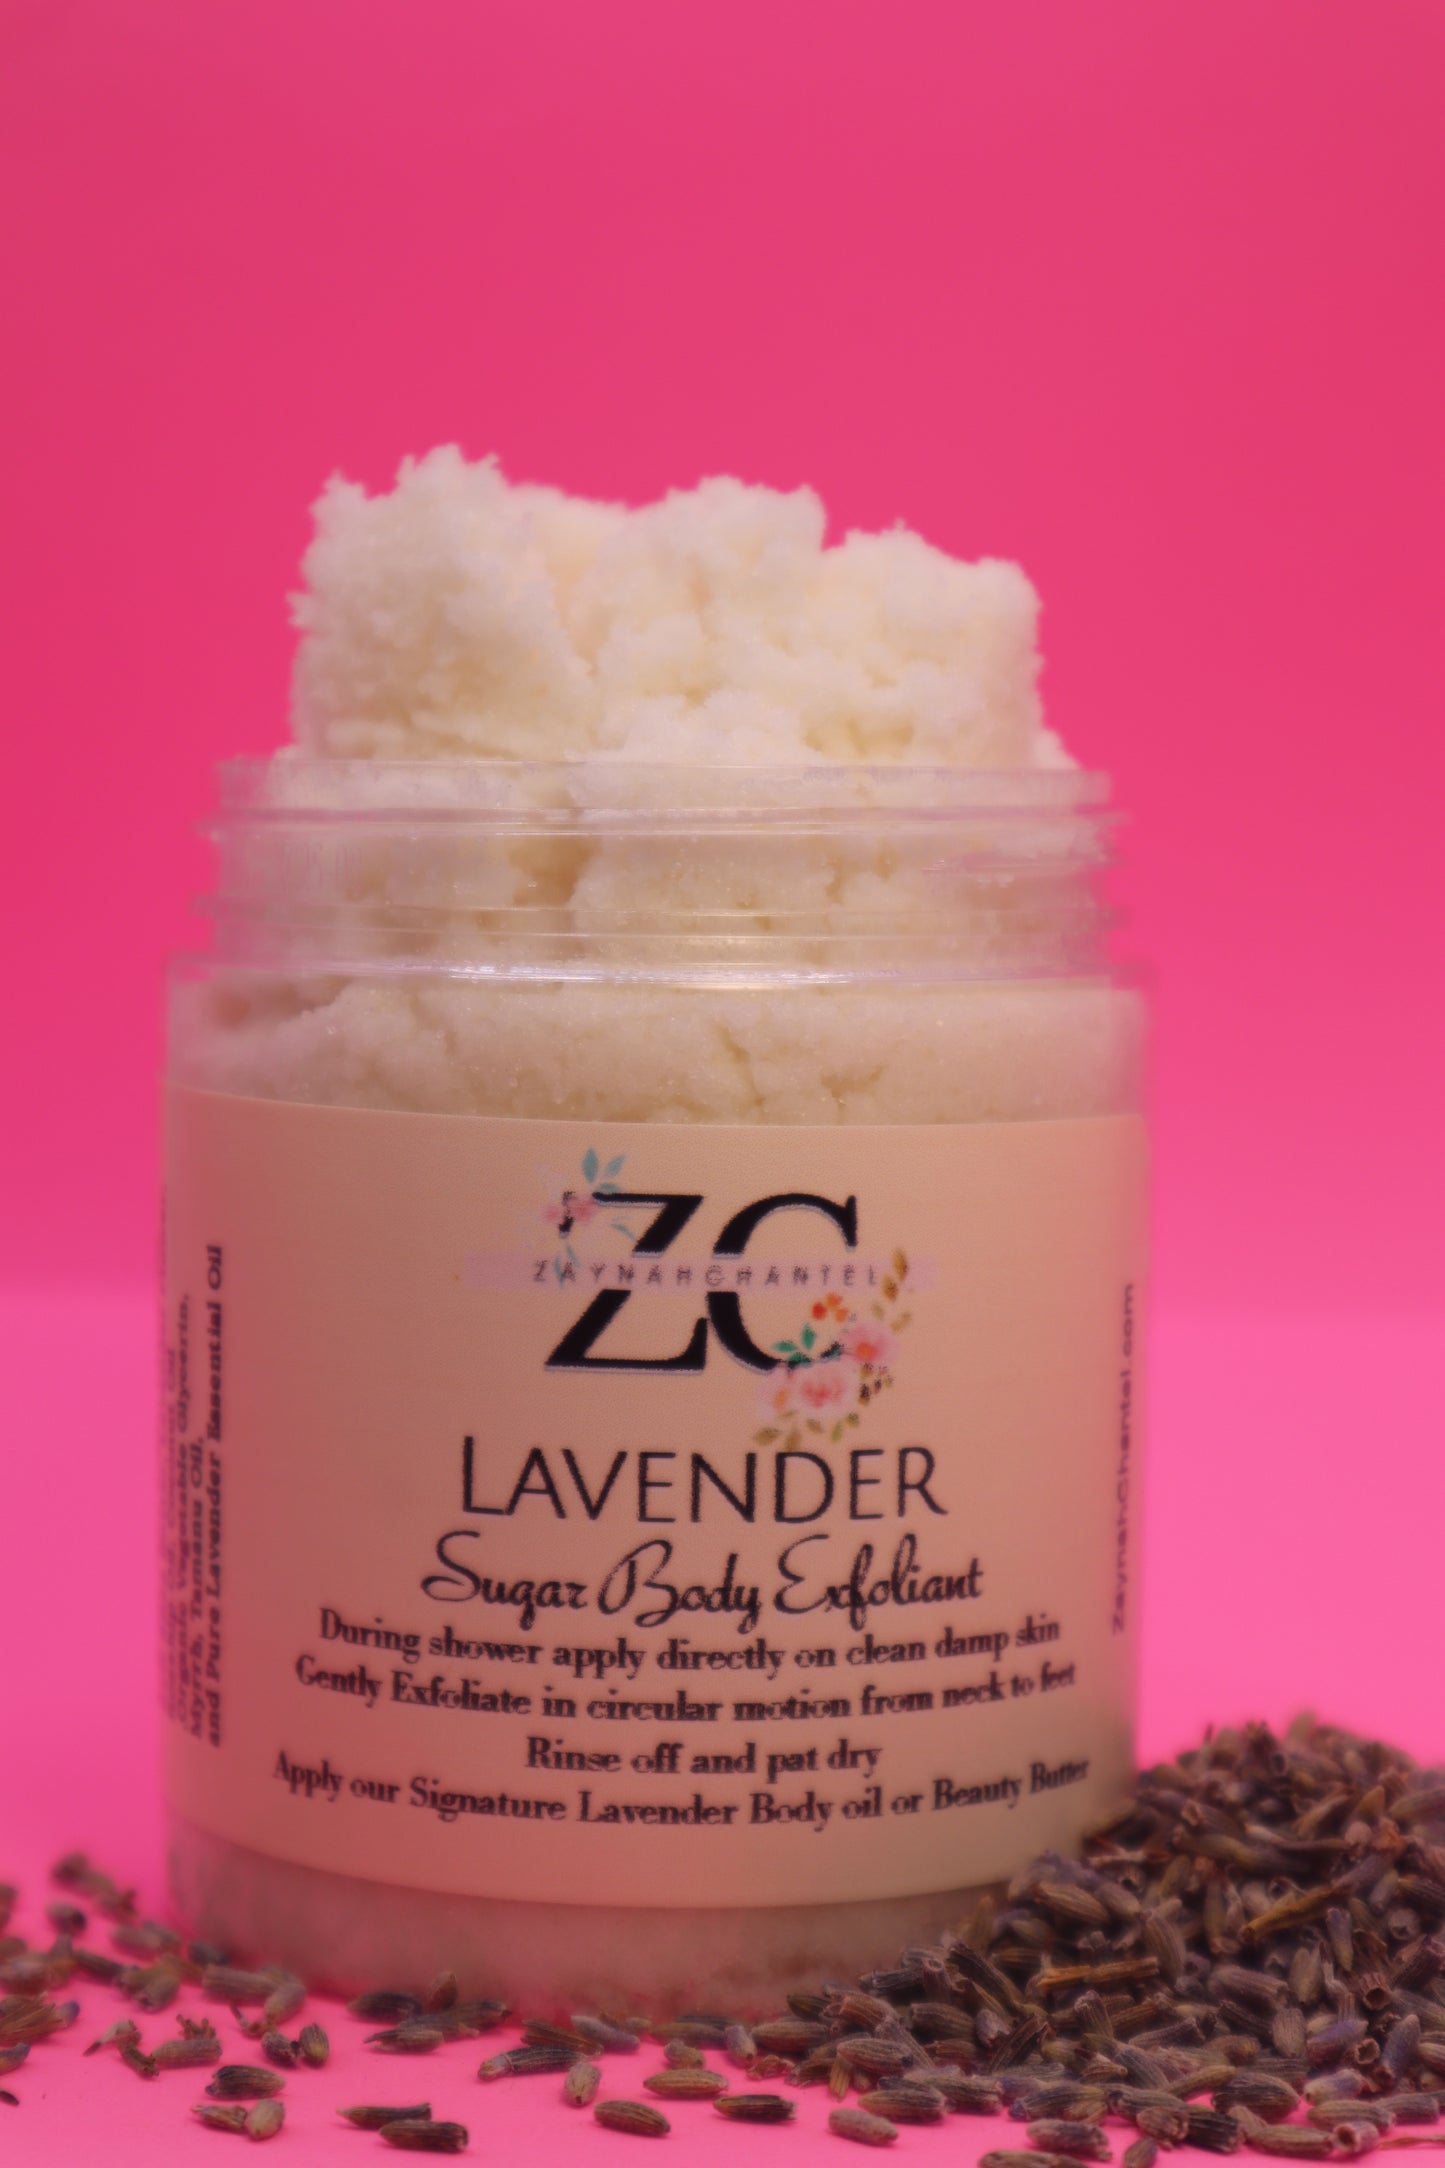 Lavender Body Exfoliant